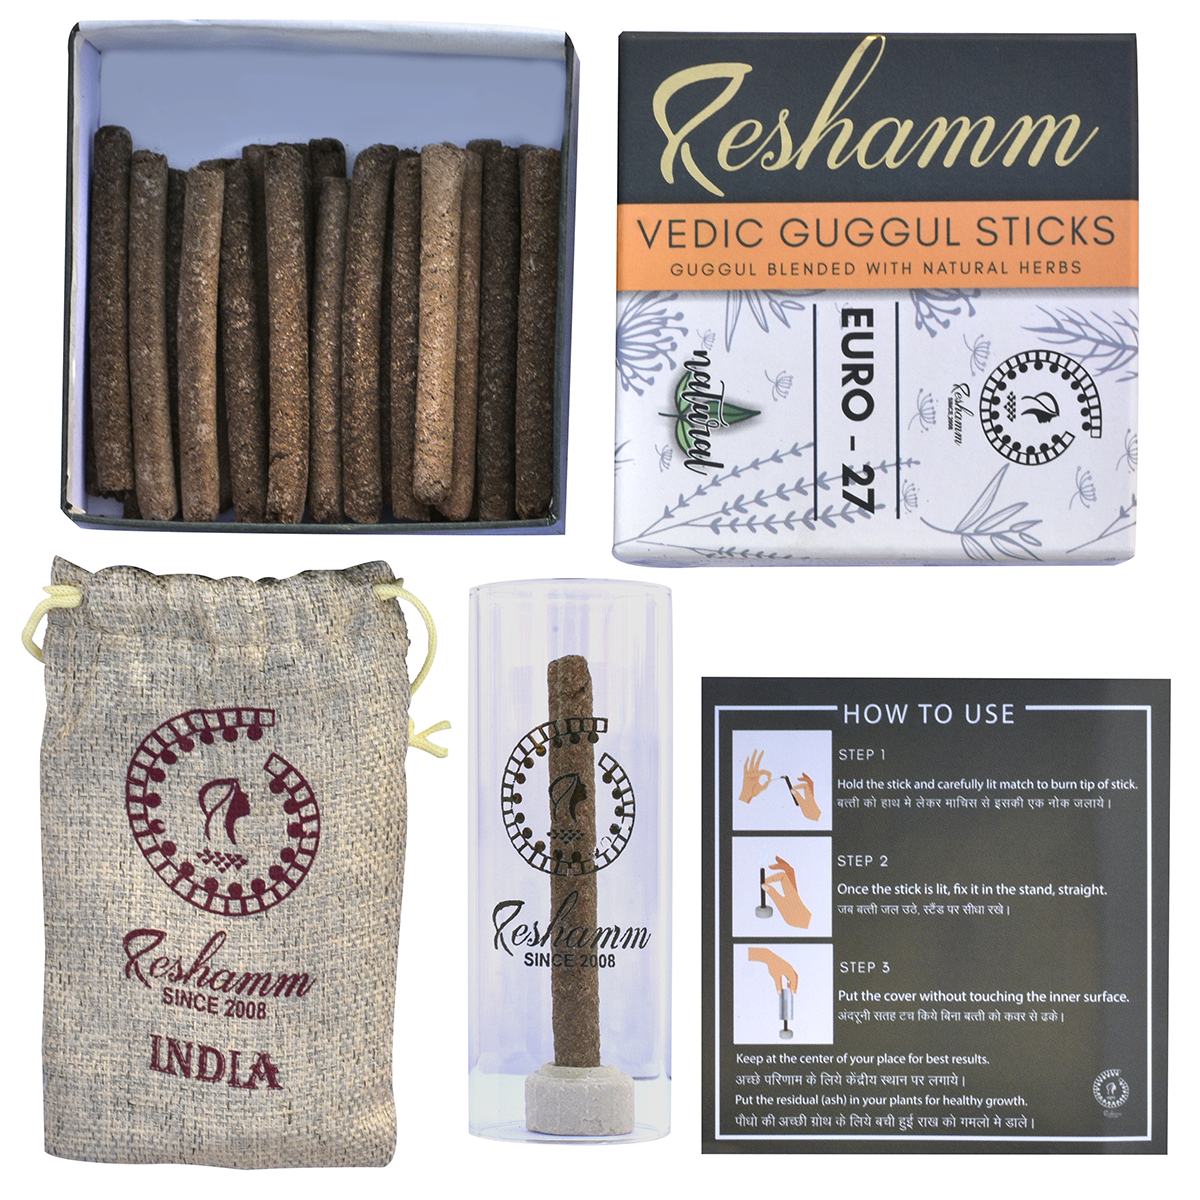 Natural & Herbal Vedic Guggul Stick, Complete Havan Powder, Navgrah Dhoop Stick & Havan Stick, Loban Sticks; Made upto 97 Types Of Natural Herbs (Pack Of 5,100g H.P) Guggul Dhoop  (Pack of 5)